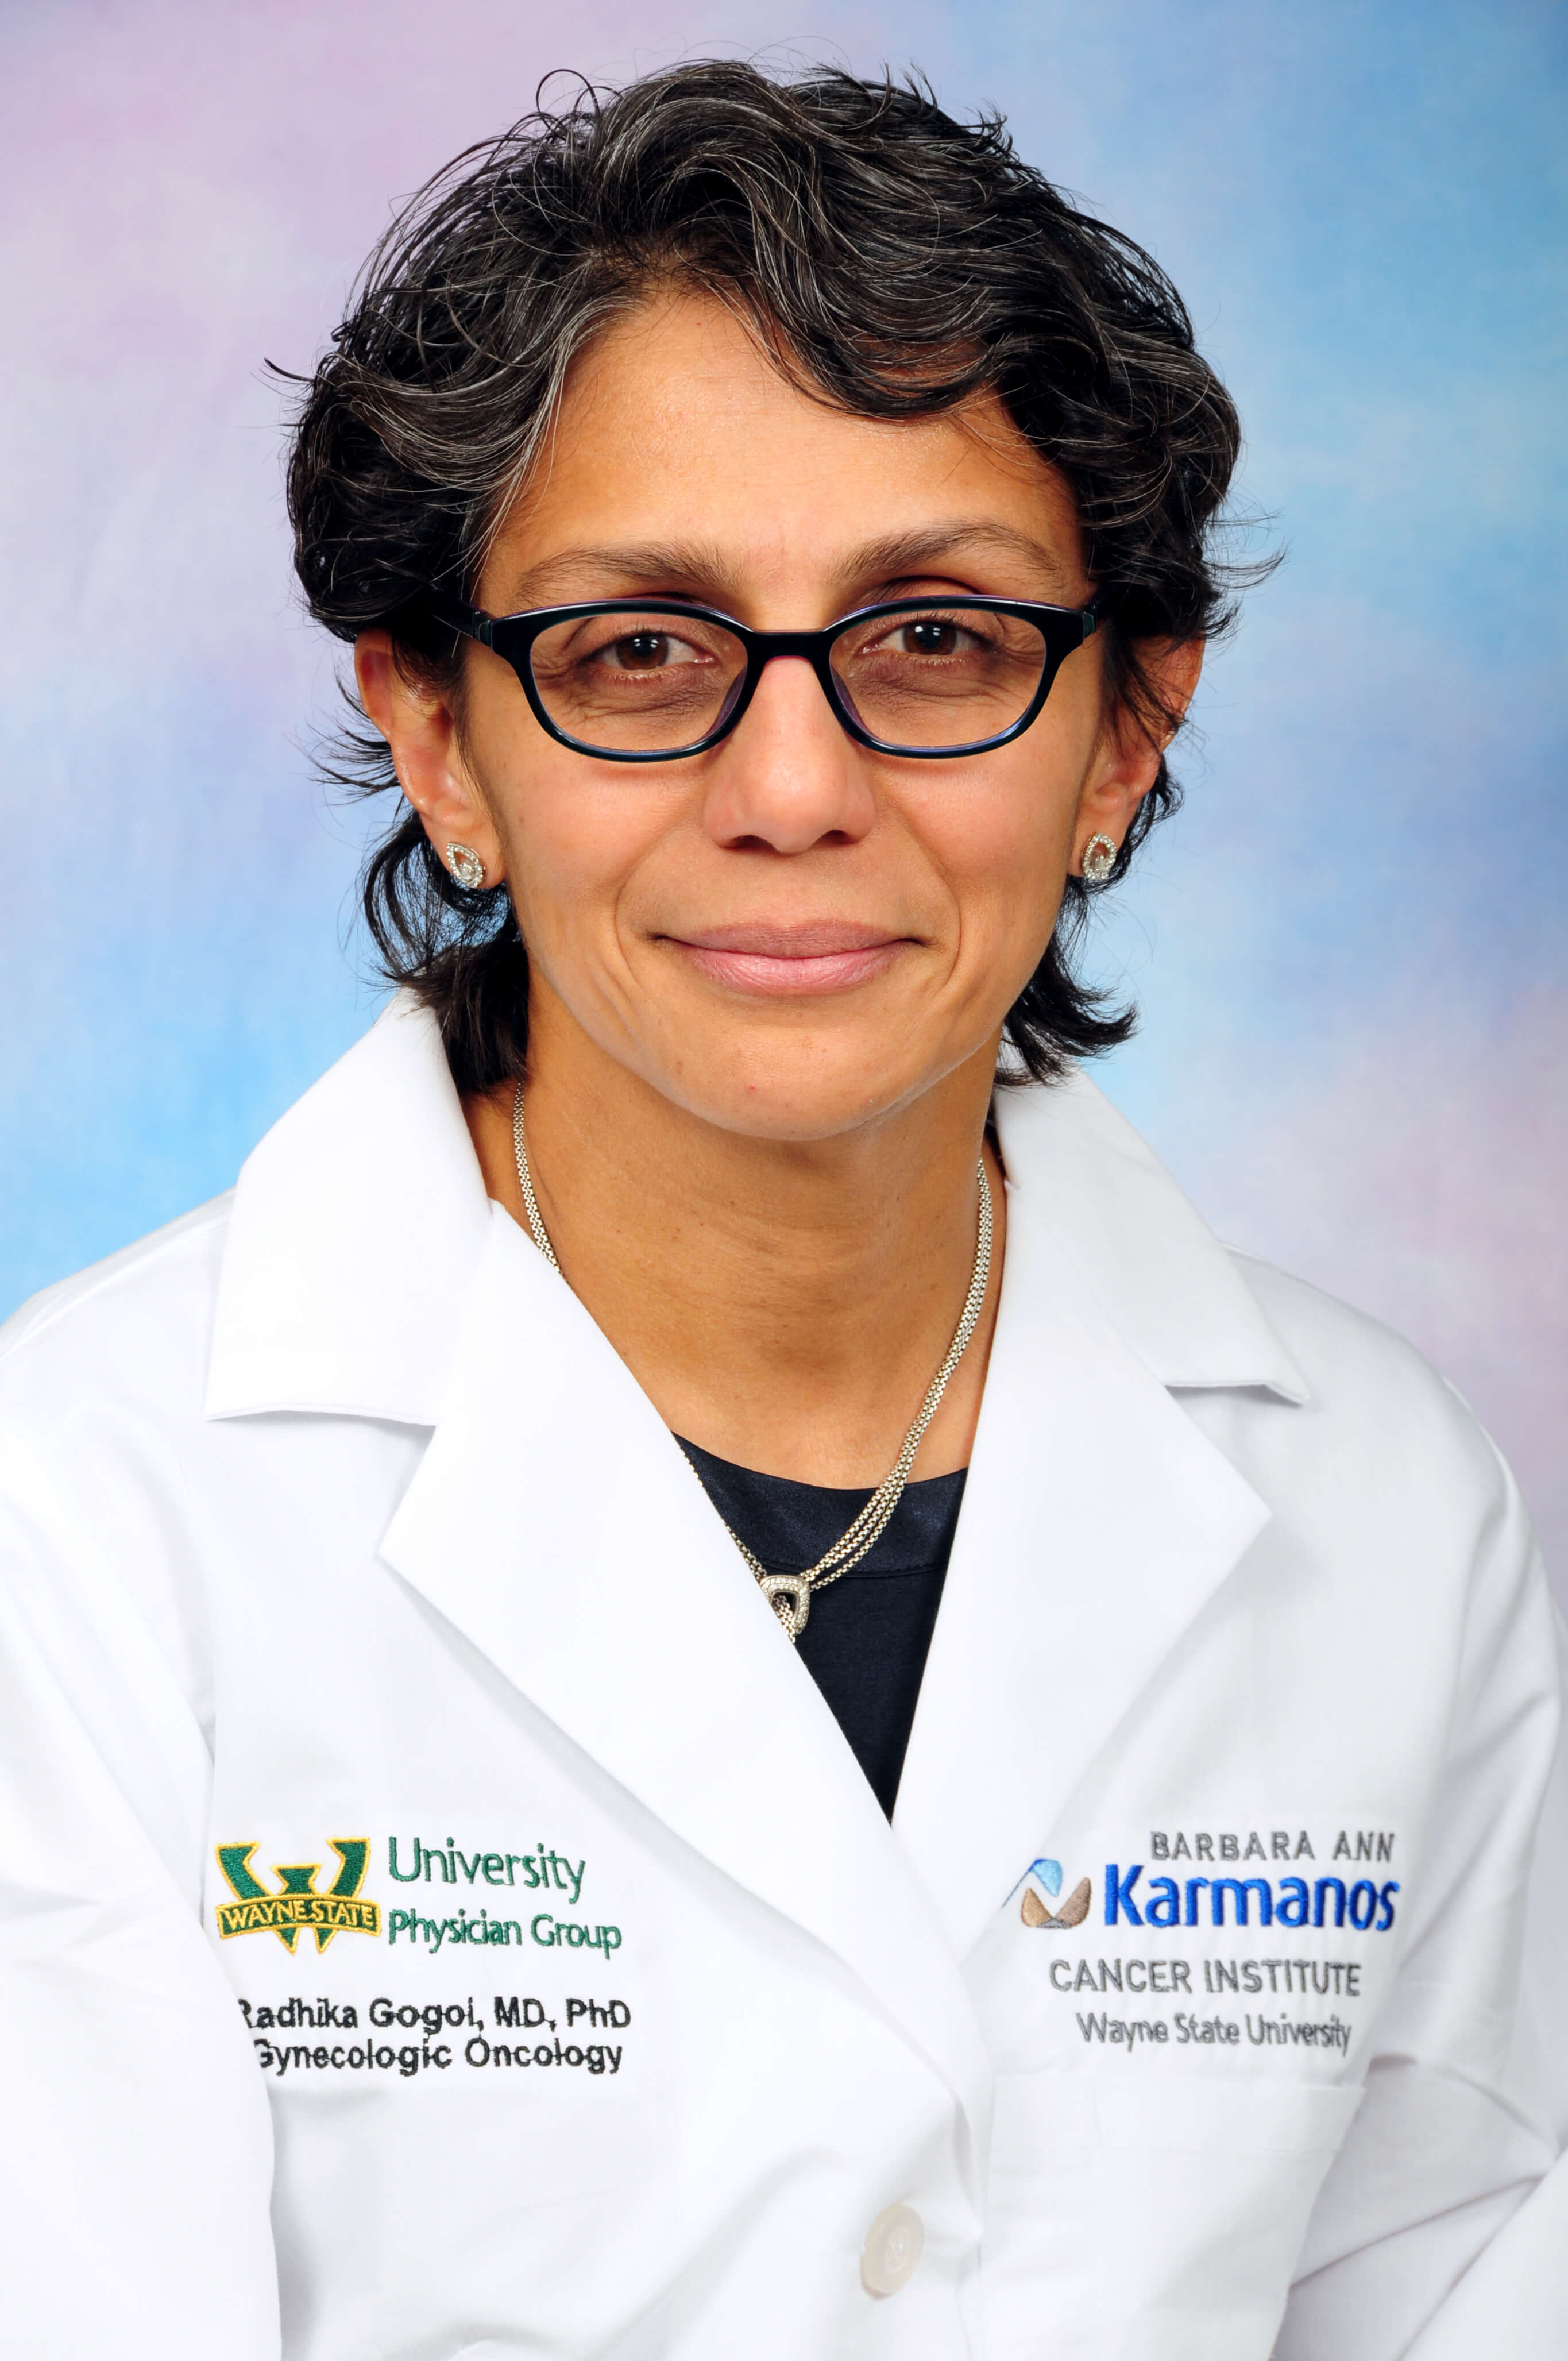 Radhika Gogoi, M.D., Ph.D.